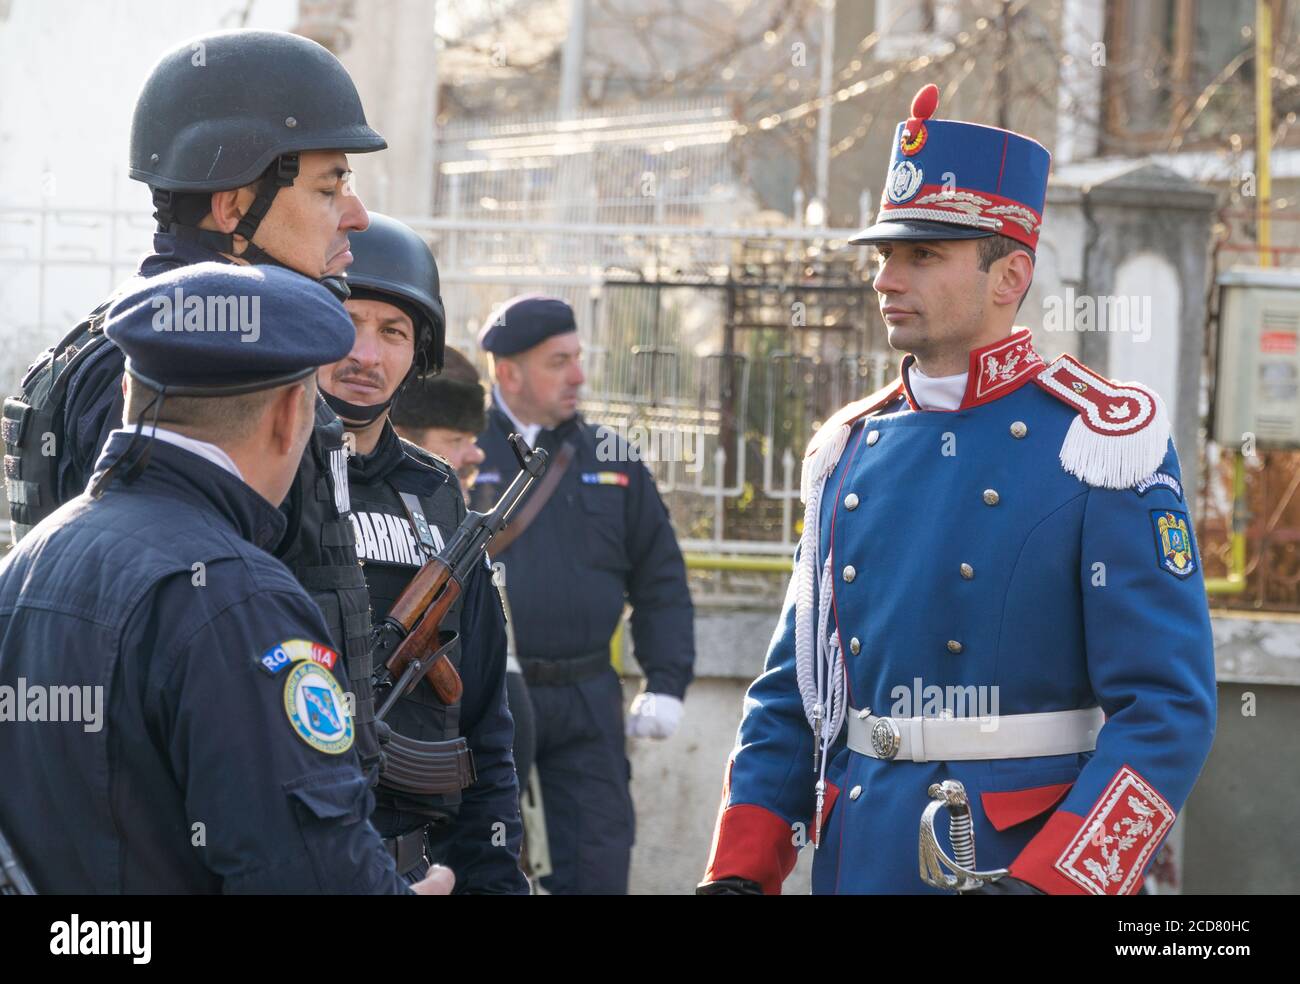 Gendarmerie uniform hi-res stock photography and images - Alamy